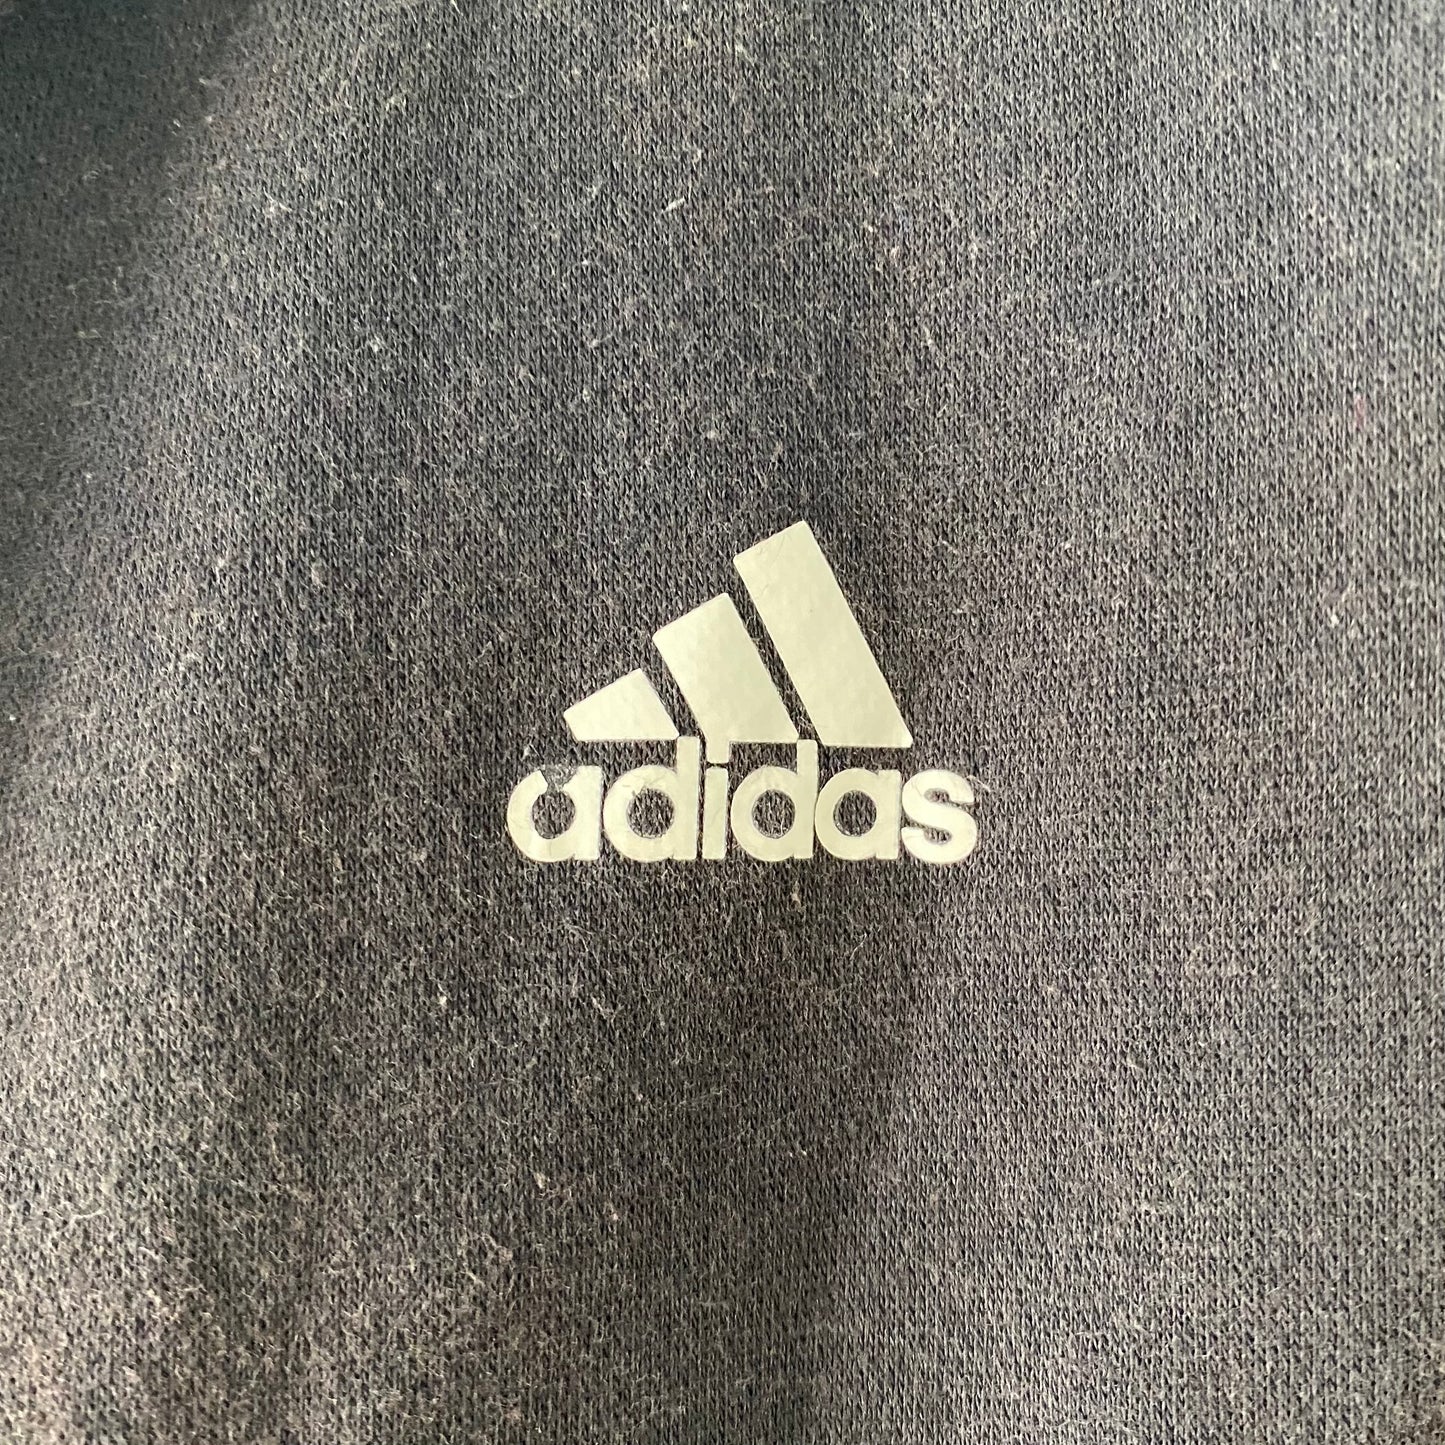 Age 13/14, Grey and Black Adidas Vest